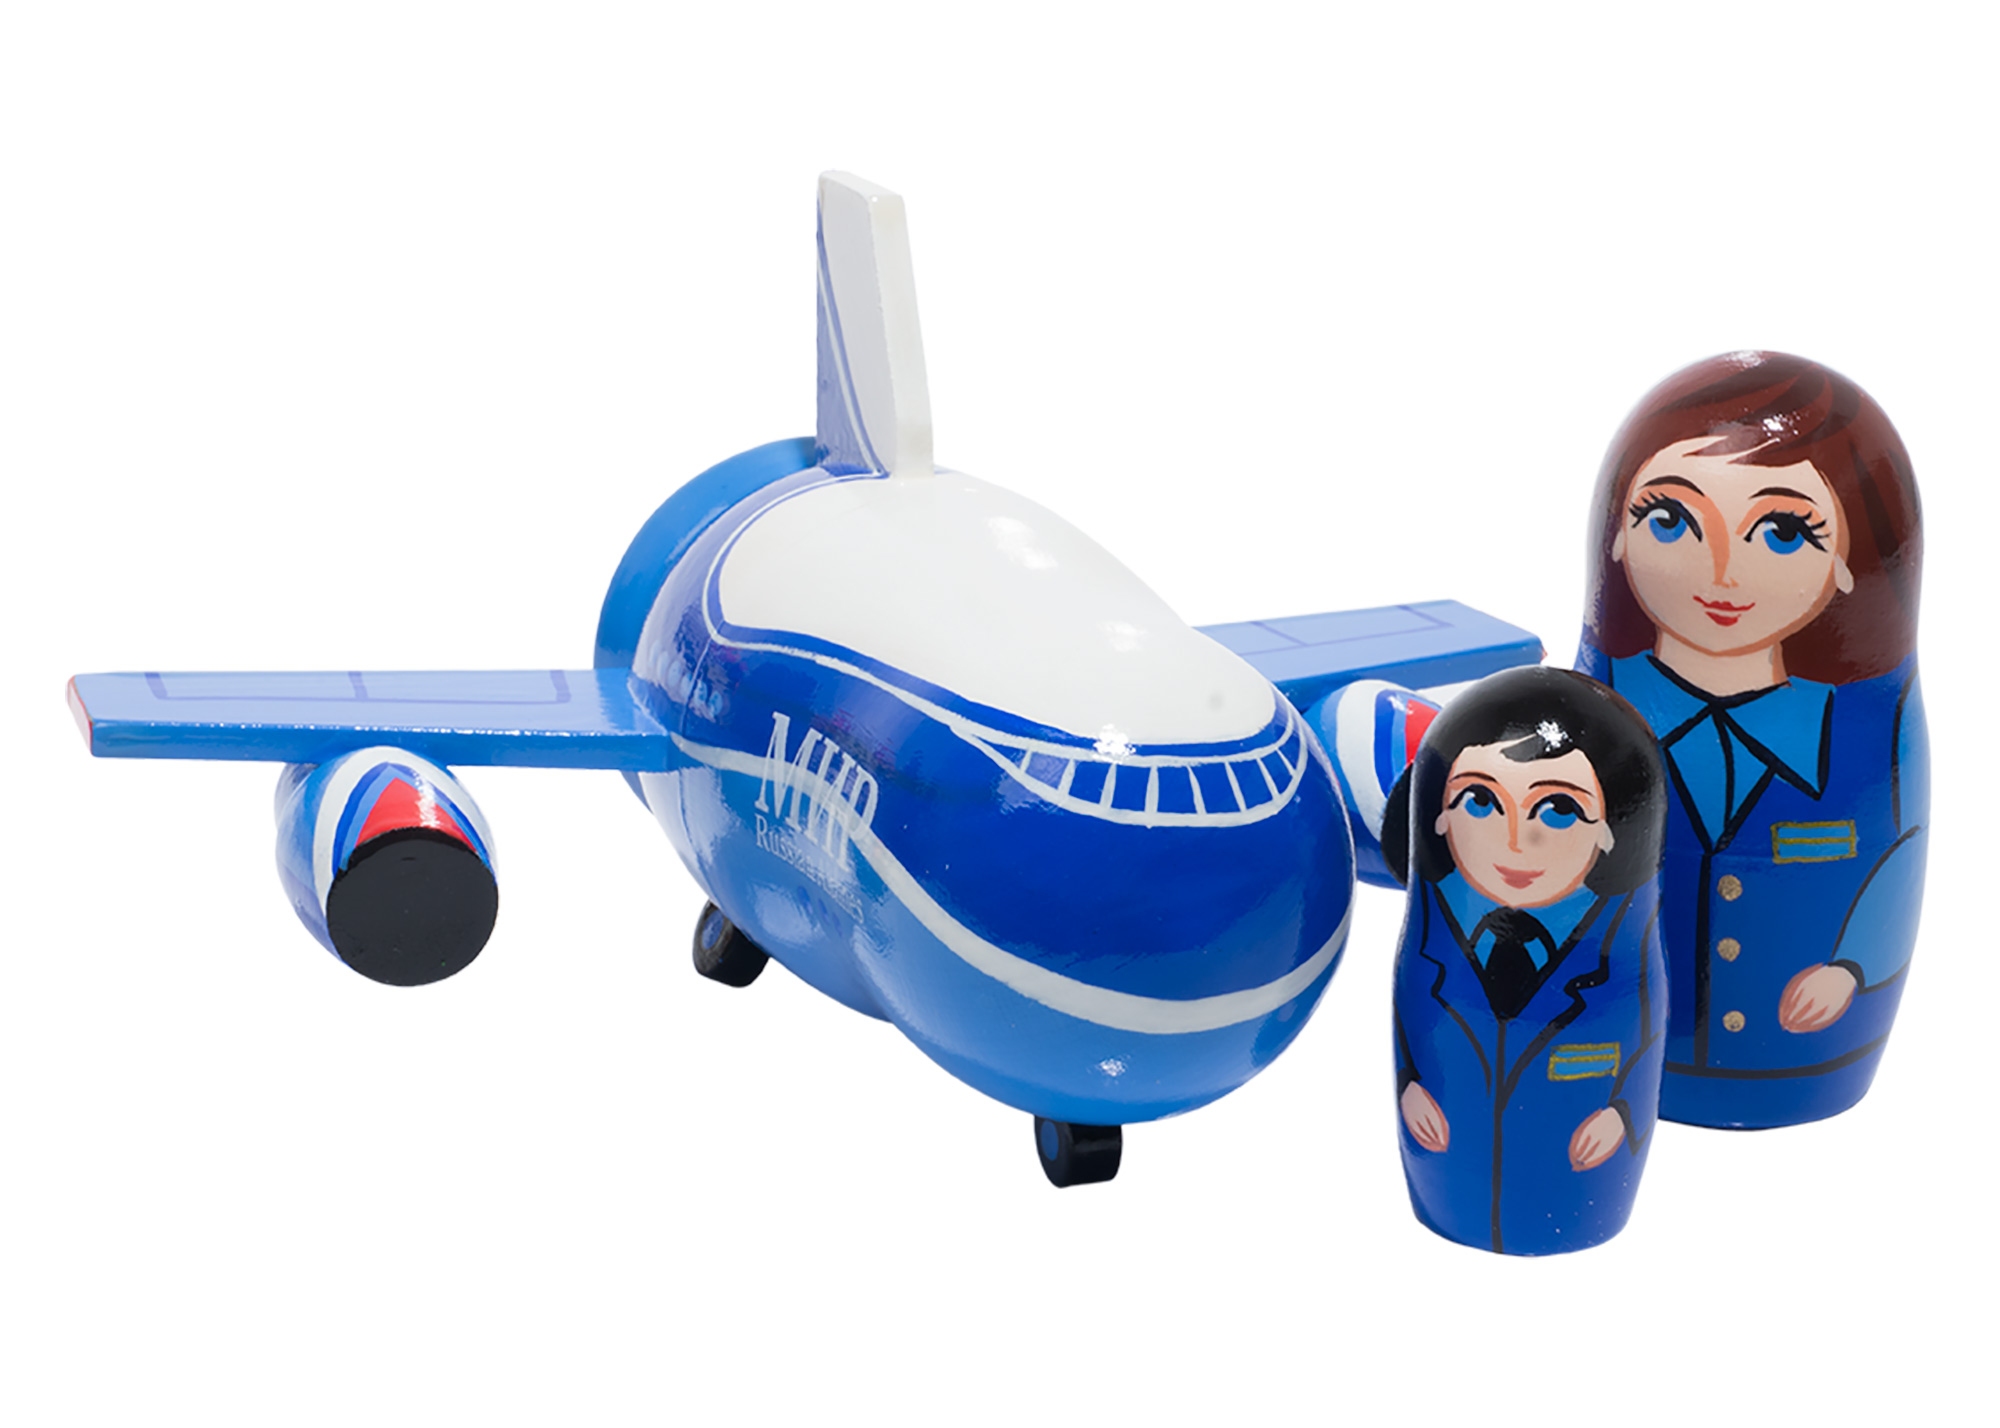 Buy MIR Airplane Nesting Doll 3pc./4" at GoldenCockerel.com